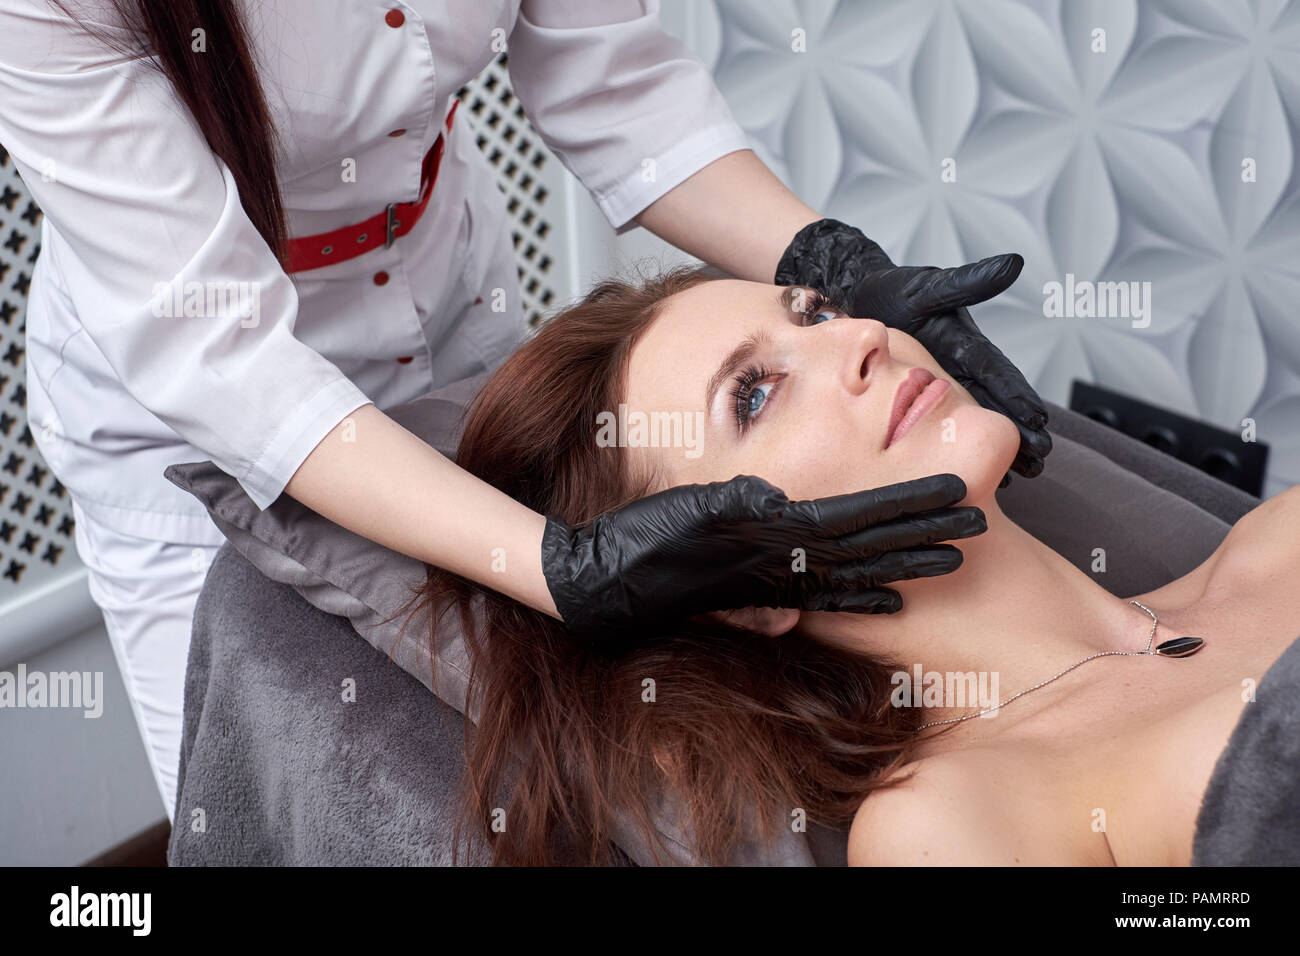 Massage and facial peels at the salon using cosmetics Stock Photo